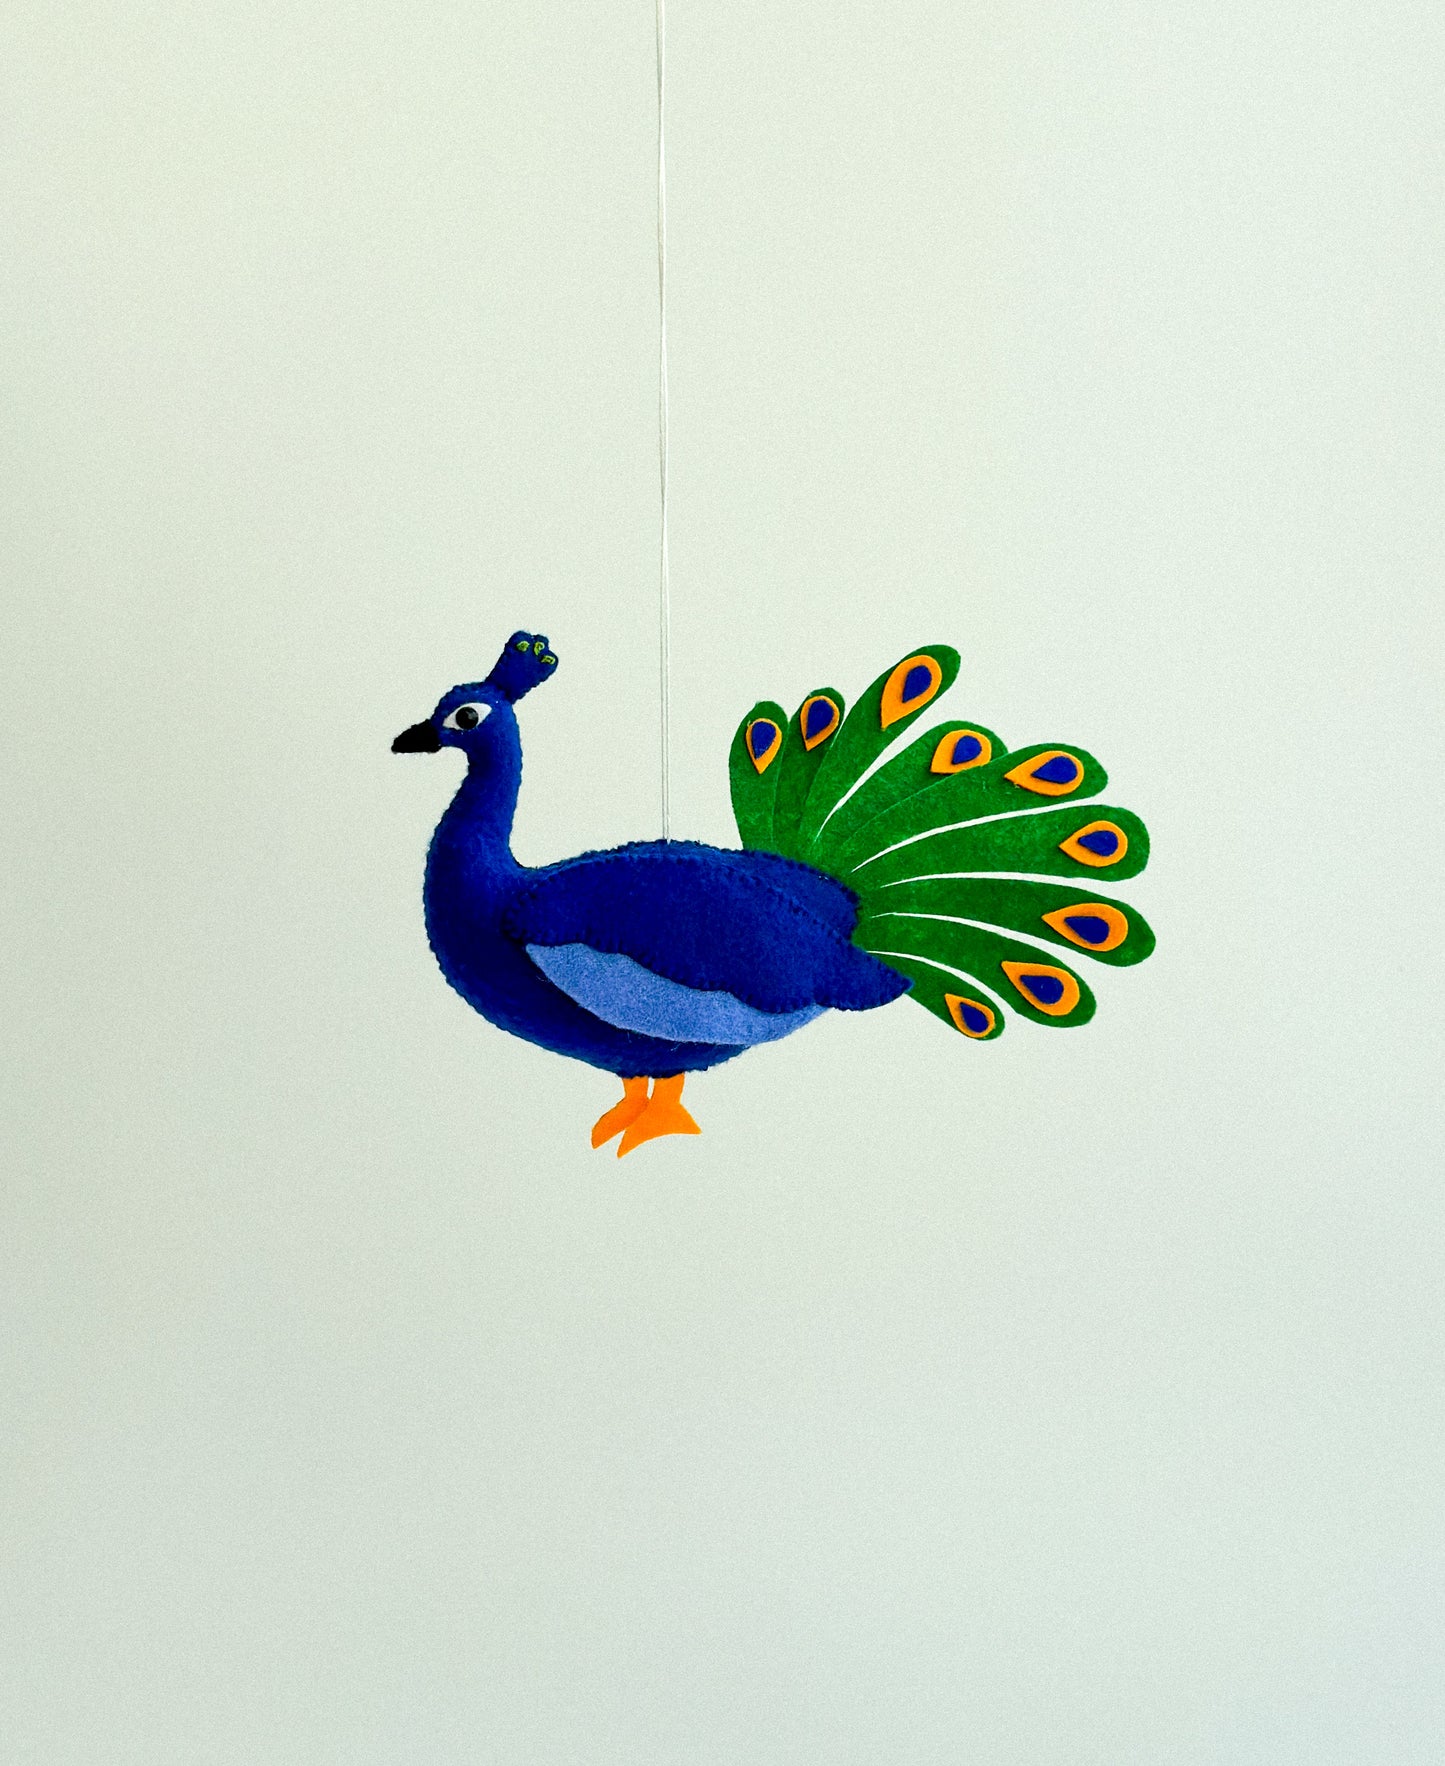 Felt Peacock Ornament